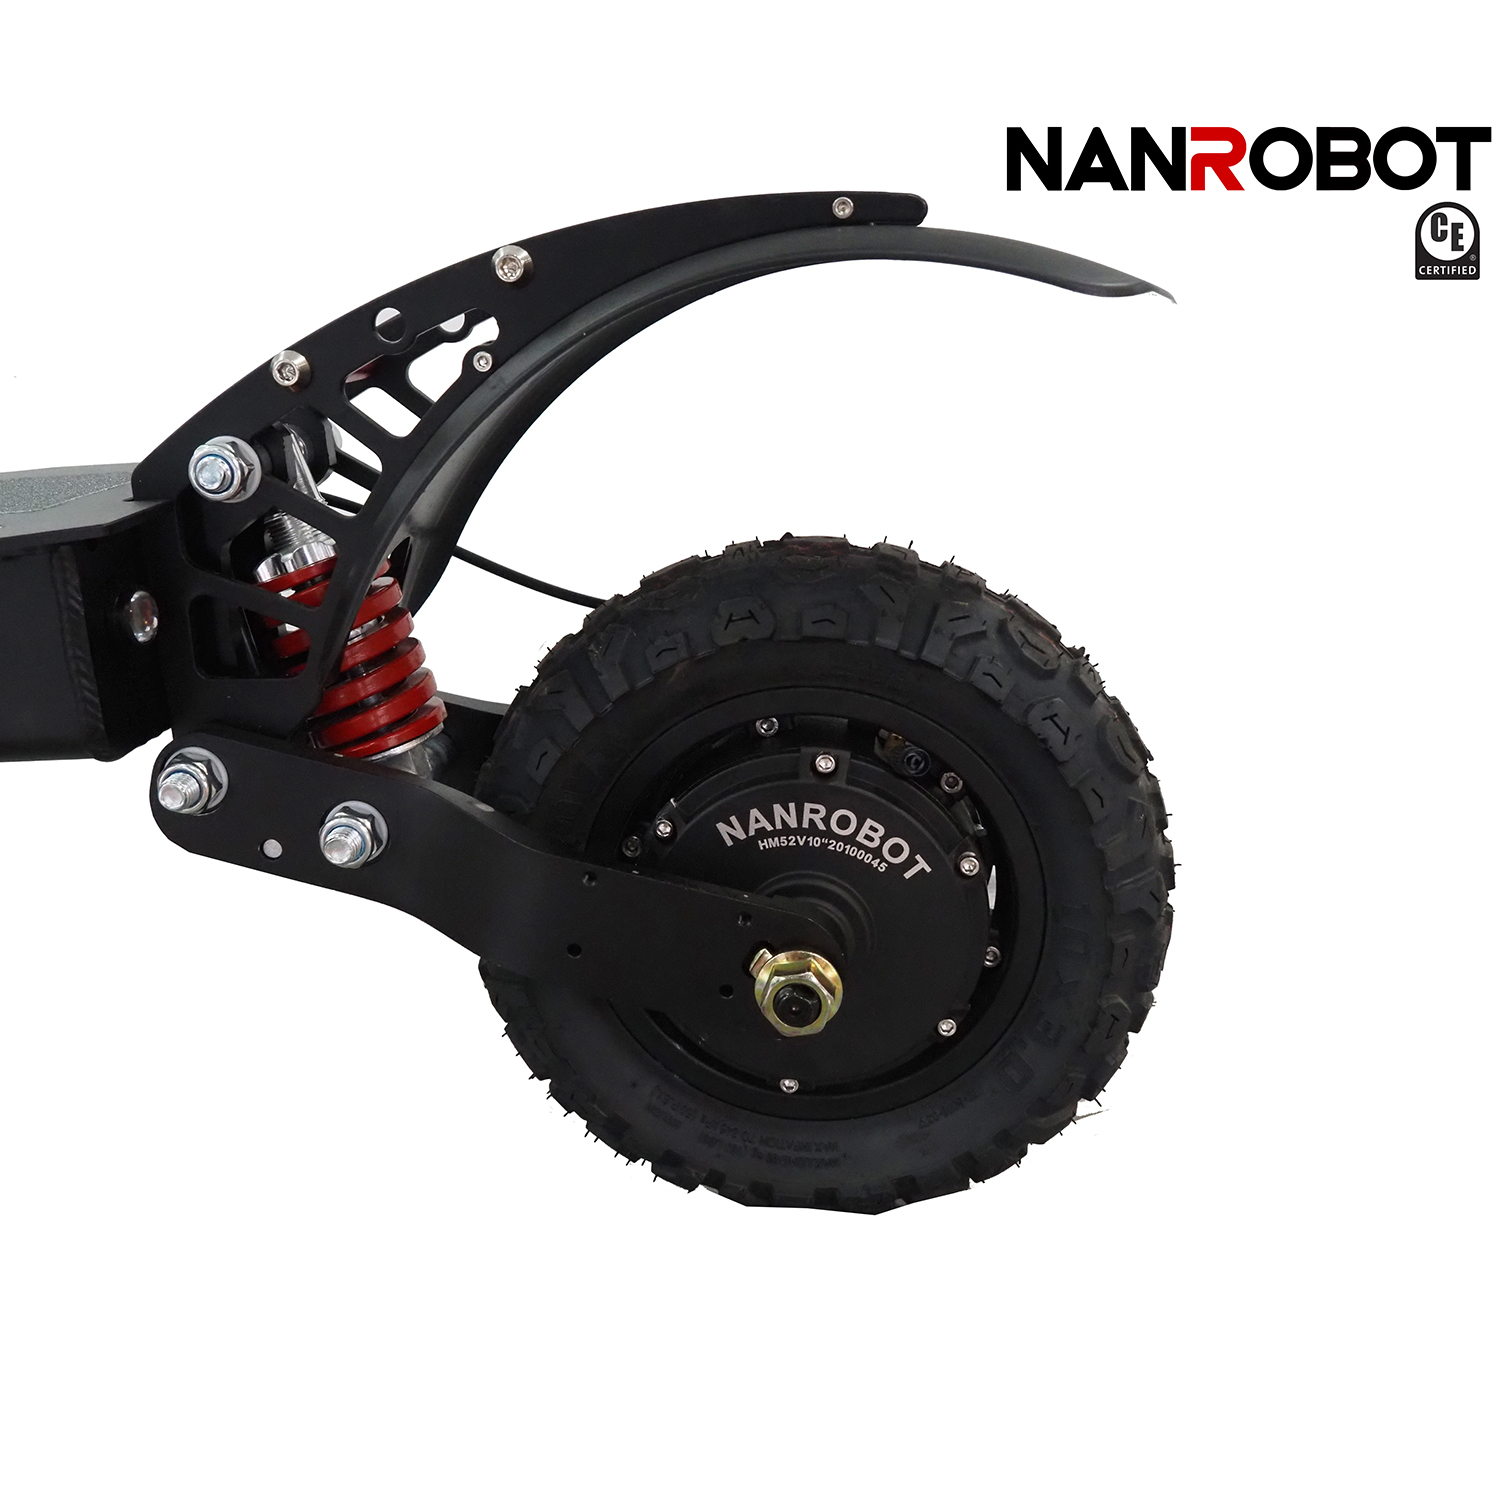 NANROBOT D4+3.0-A ELECTRIC SCOOTER 10″-2000W-52V 23.4AH